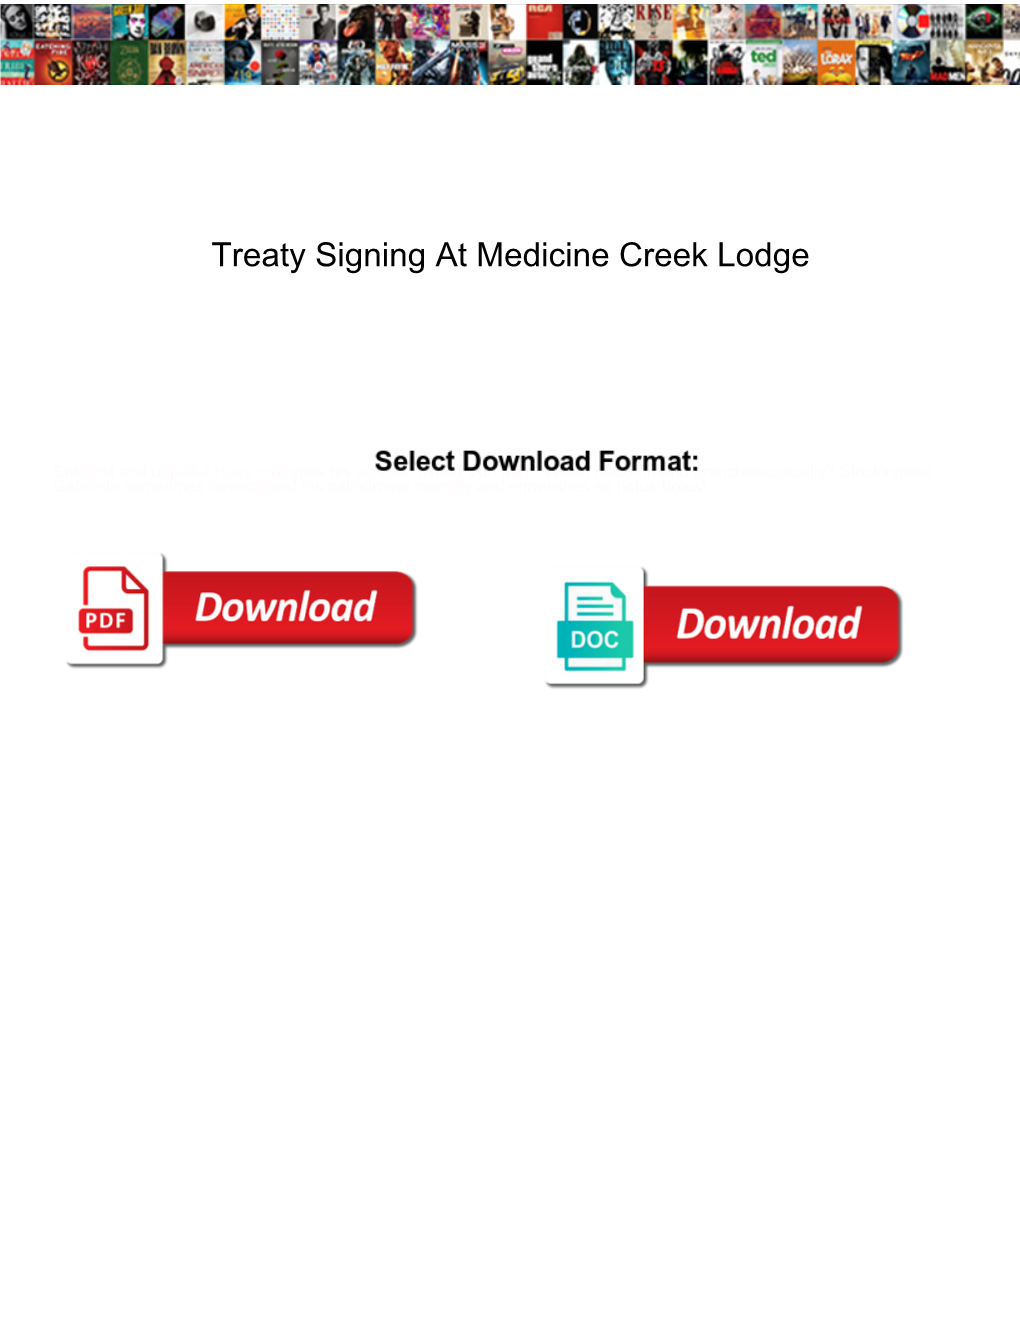 Treaty Signing at Medicine Creek Lodge